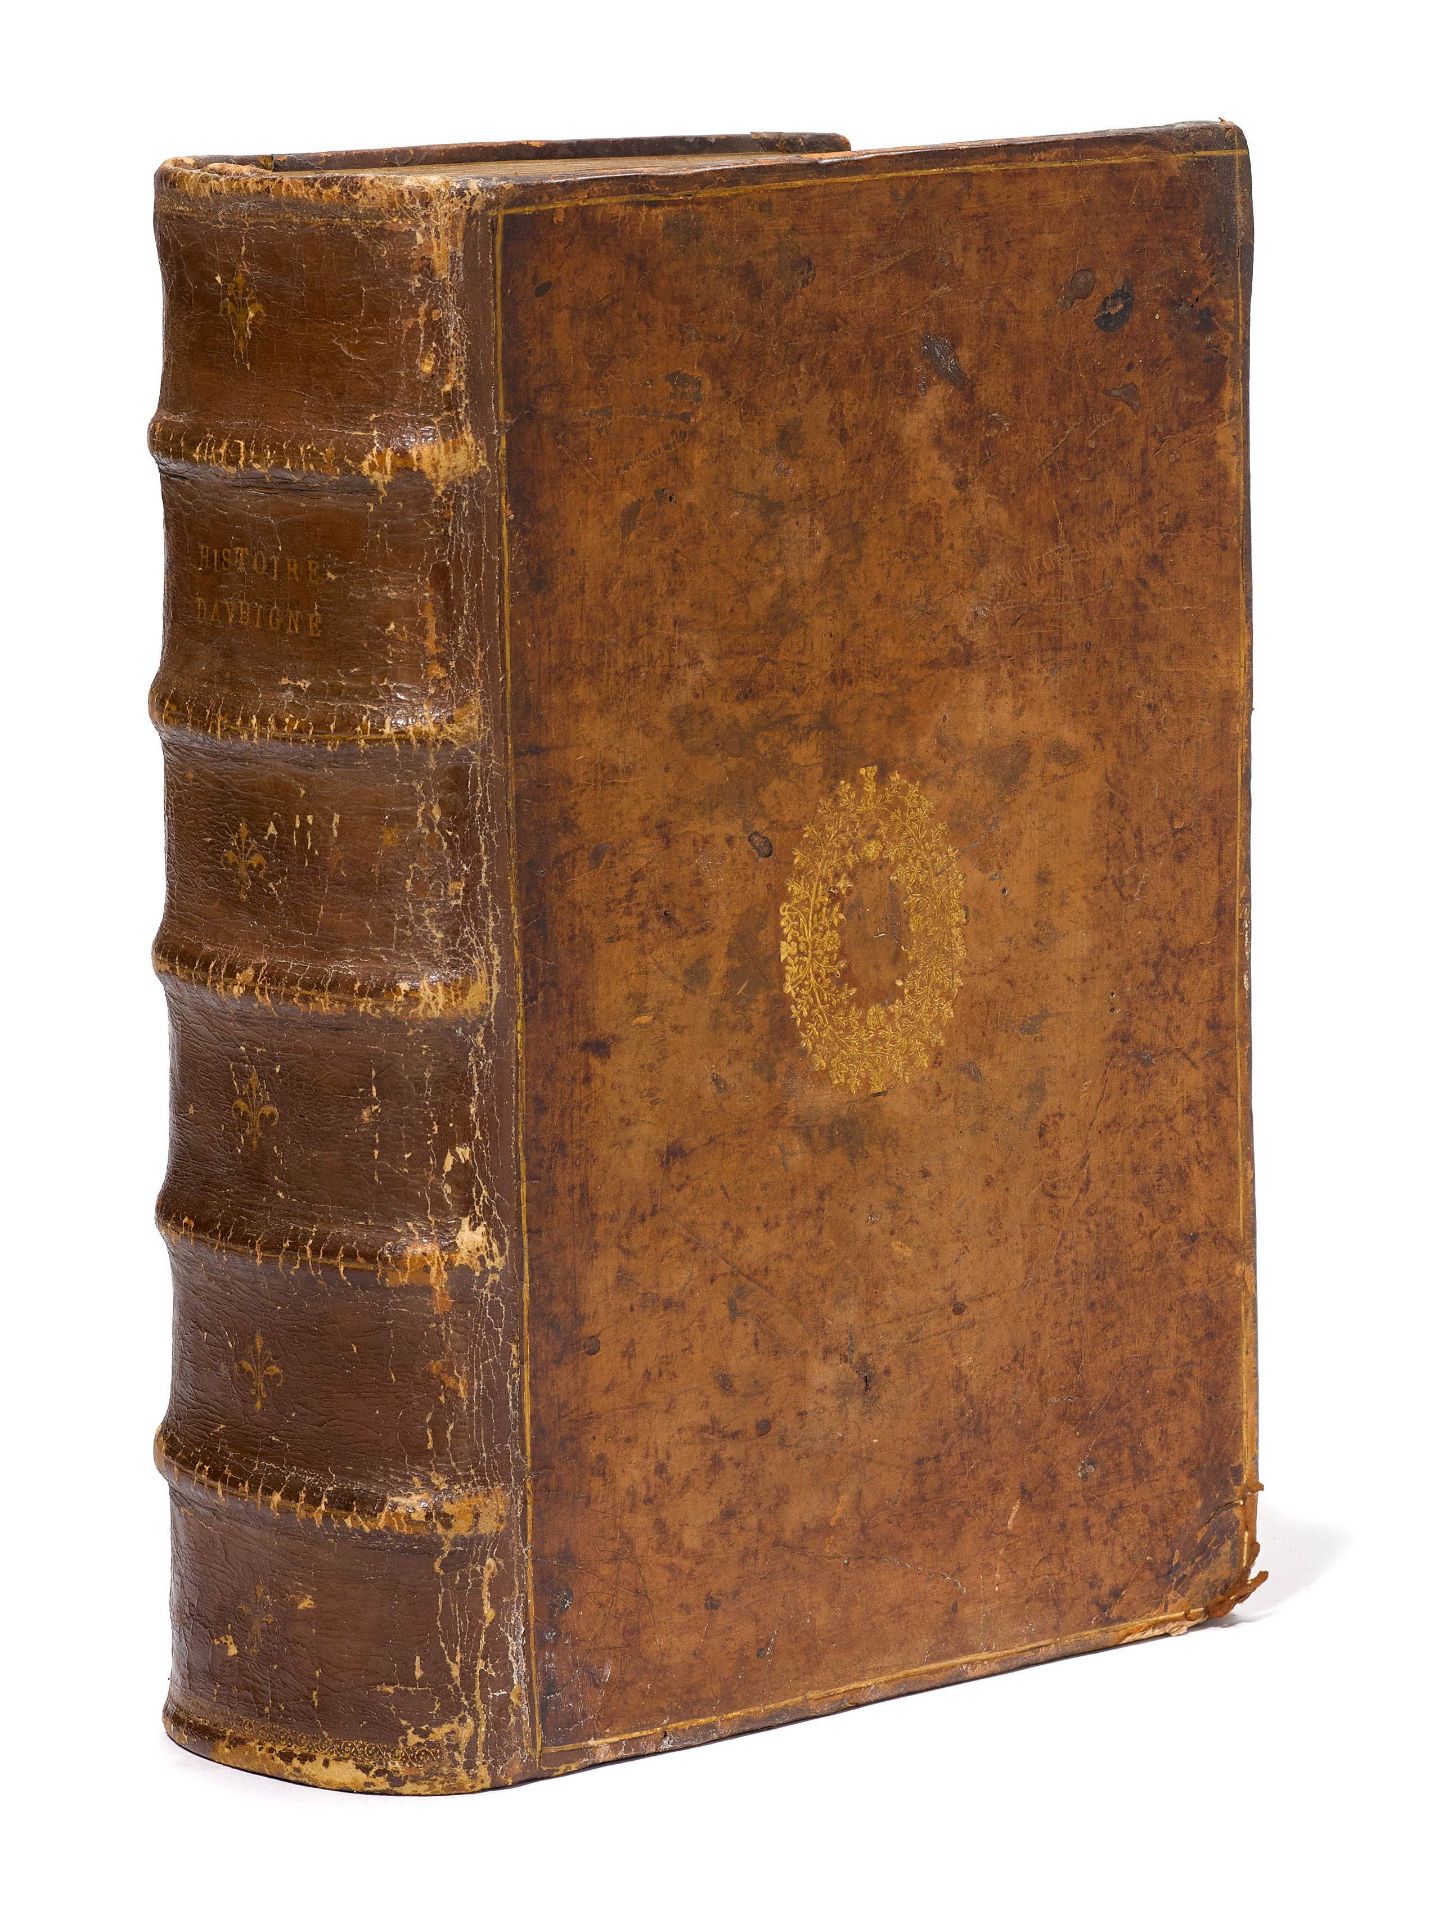 Aubigné, Agrippa d'.Histoire Universelle. 3 Teile in 1 Band.Maillé, Jean Mossat, 1616-1620. Folio.